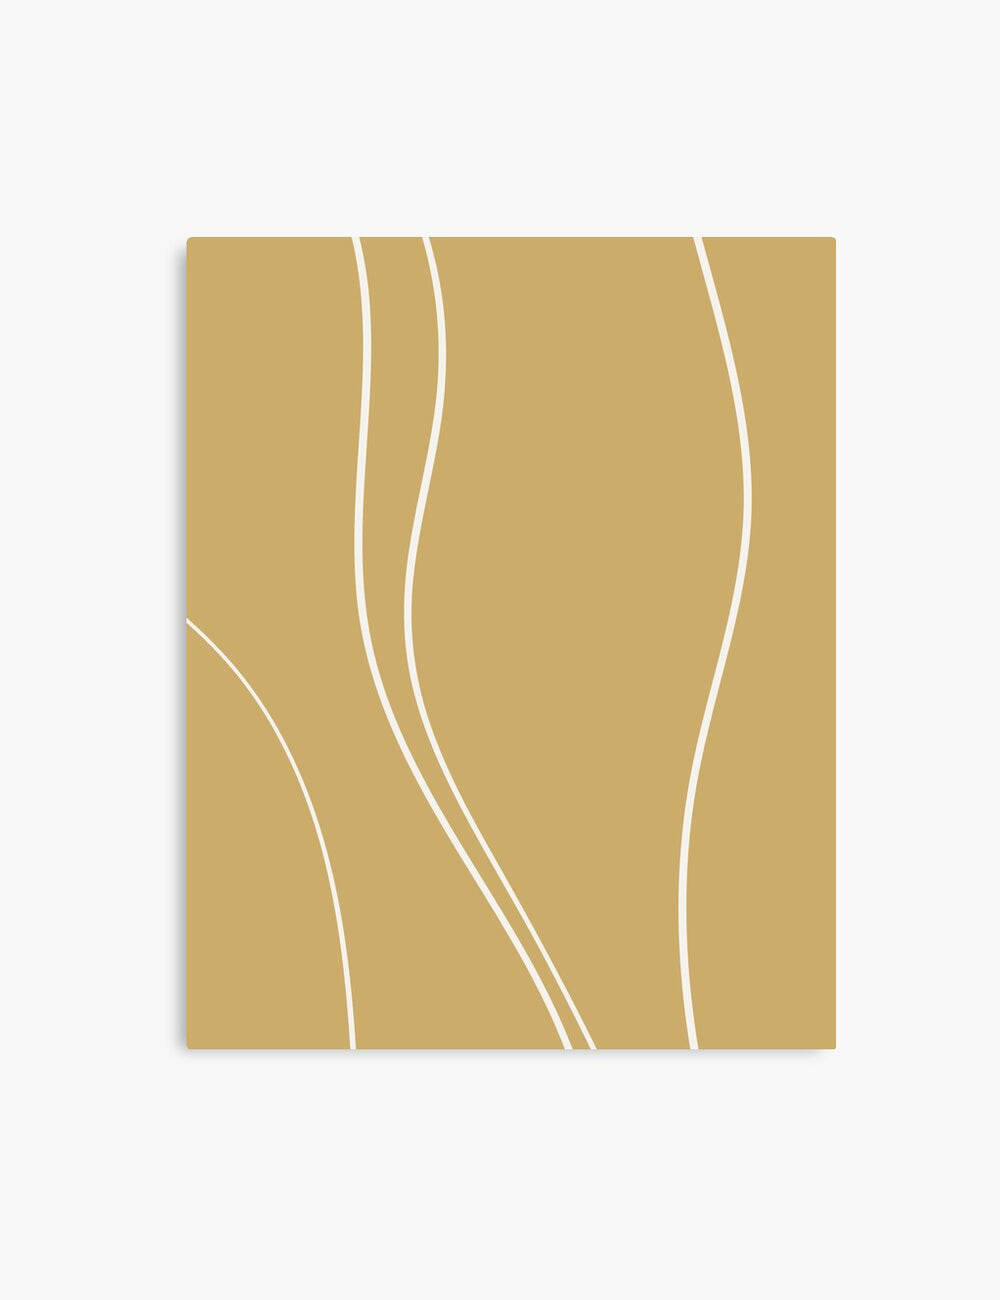 MINIMAL LINE ART. Abstract Waves. Boho. Yellow Gold. Printable Wall Art Illustration. - PAPER MOON Art & Design